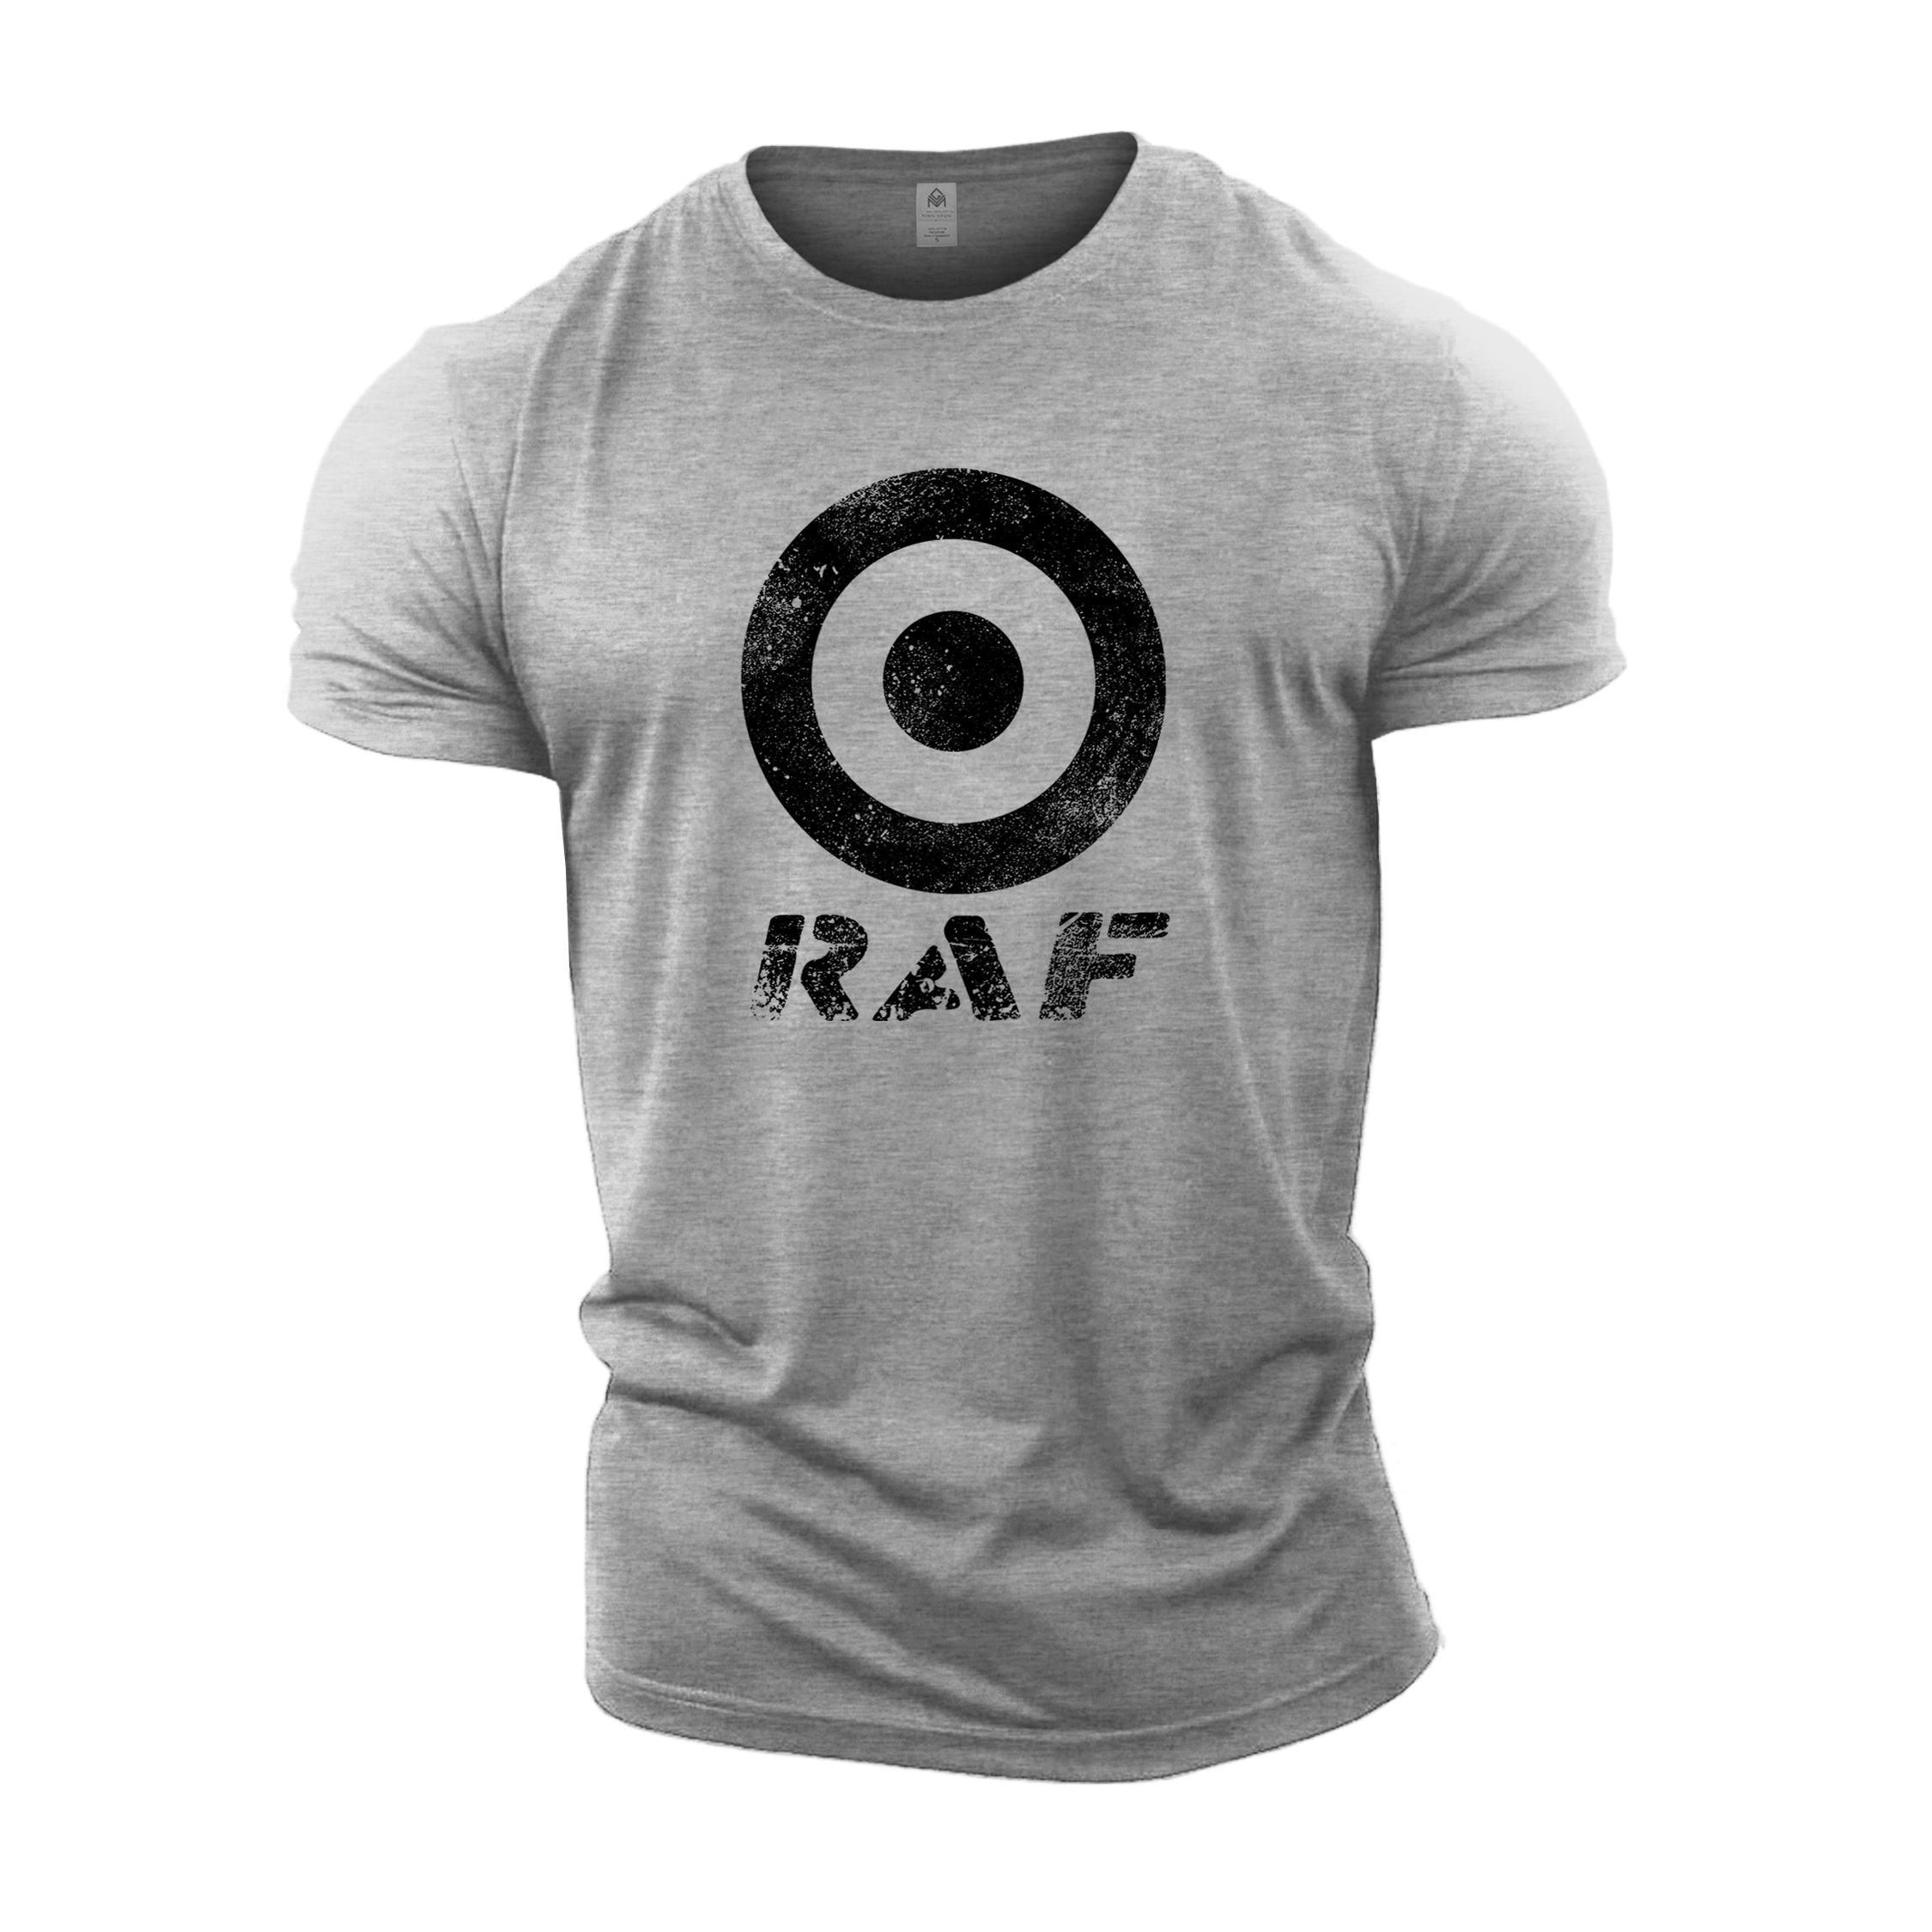 Royal Air Force RAF Chest - Gym T-Shirt